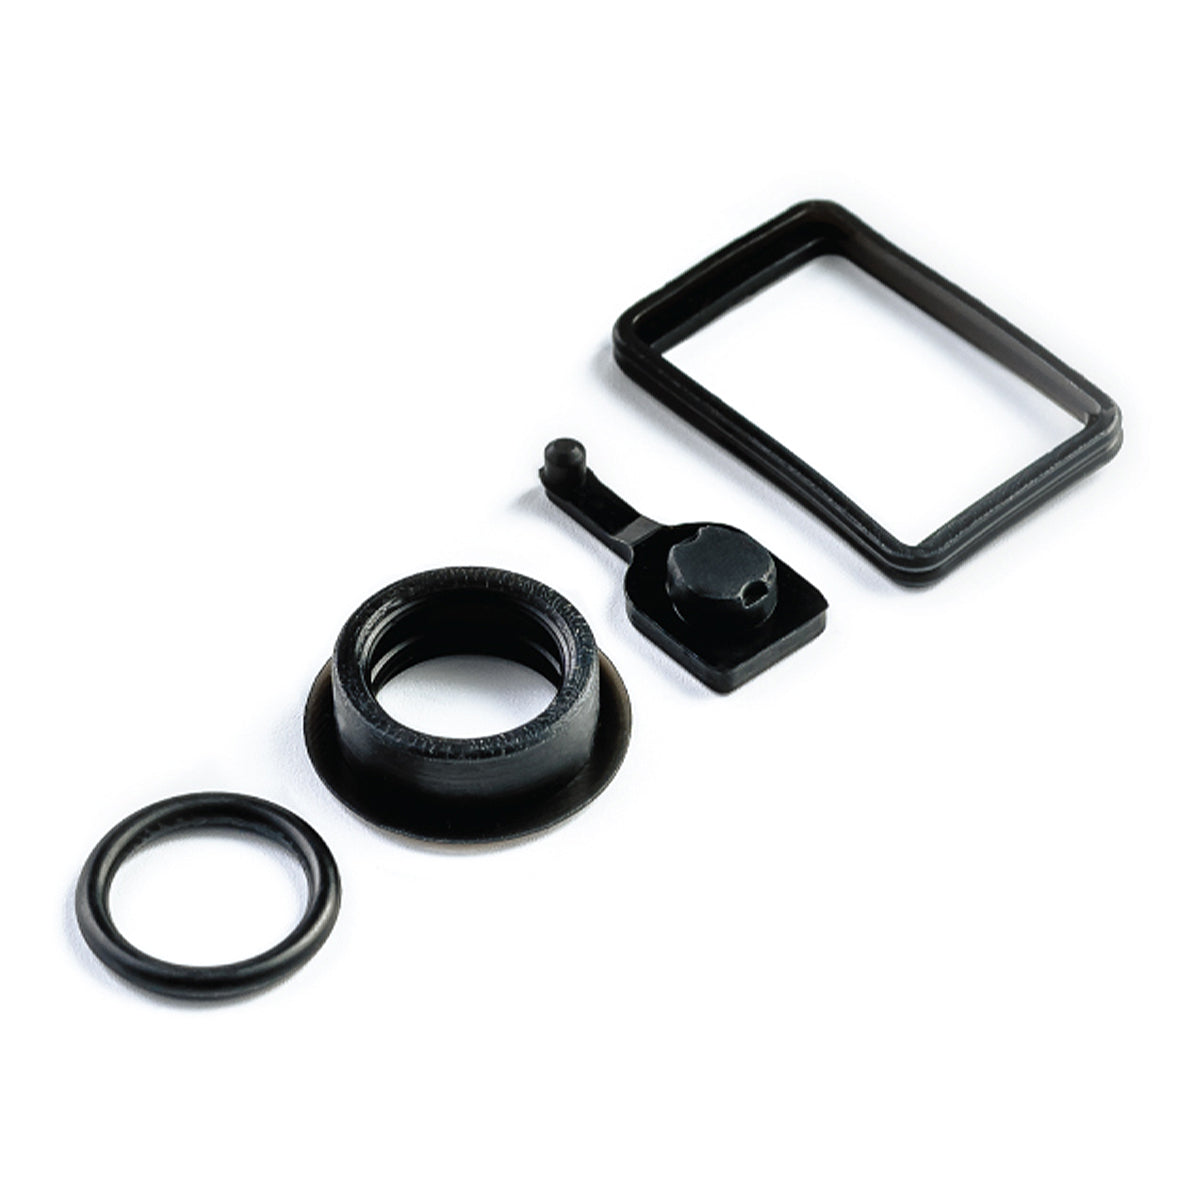 SnailTank Black O-ring Kit by Atmizoo